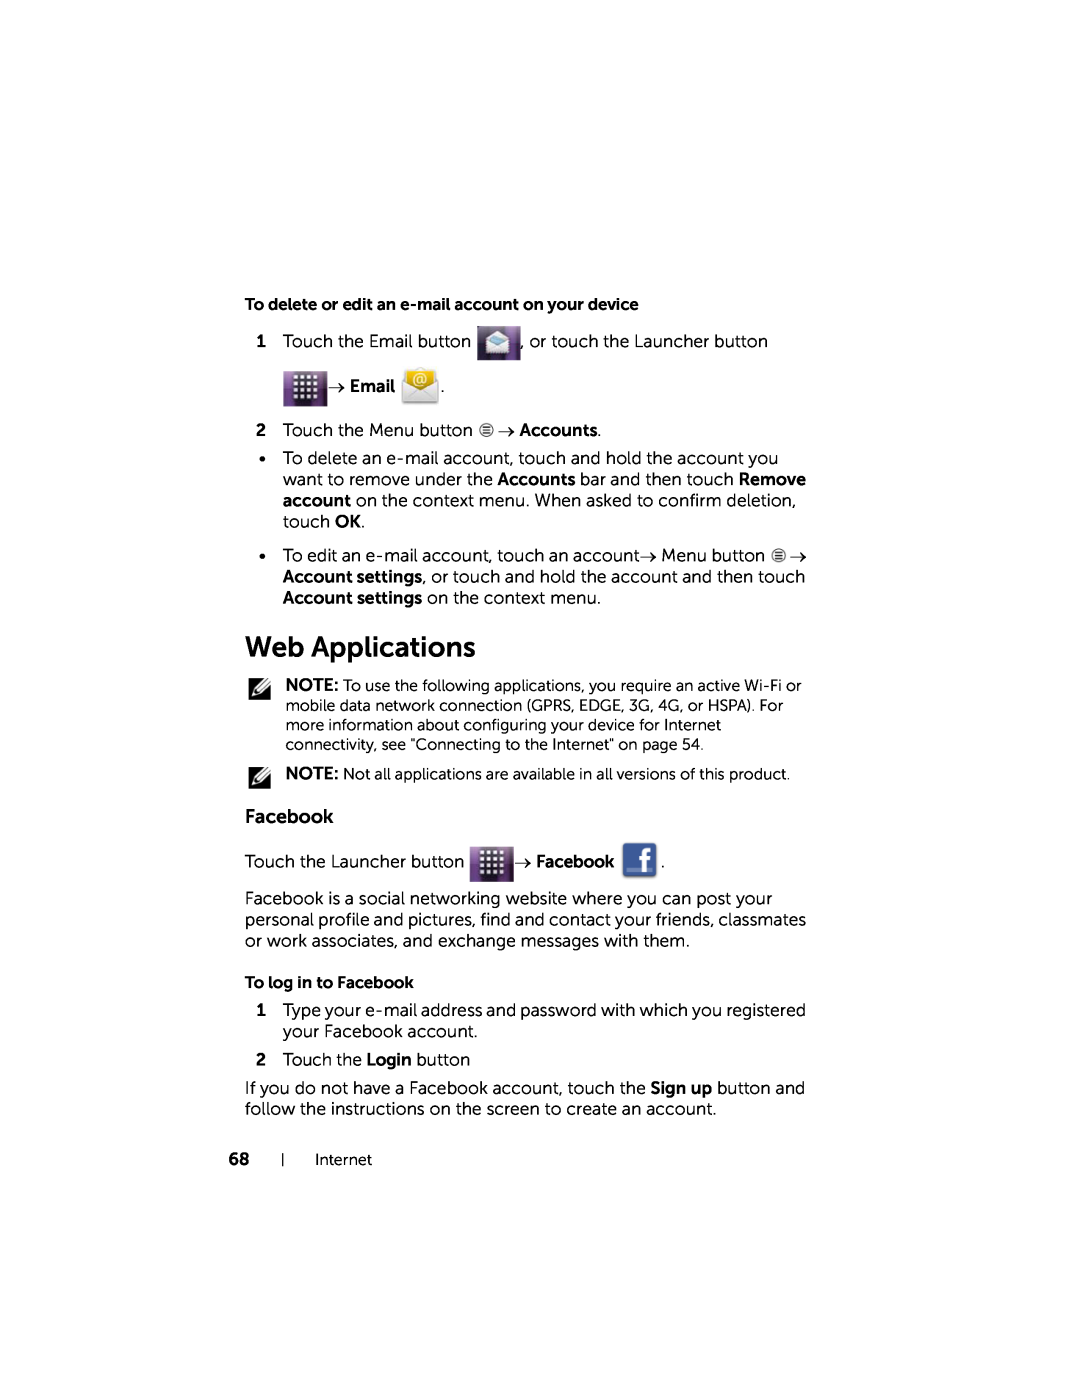 Dell 7 user manual Web Applications, Facebook 